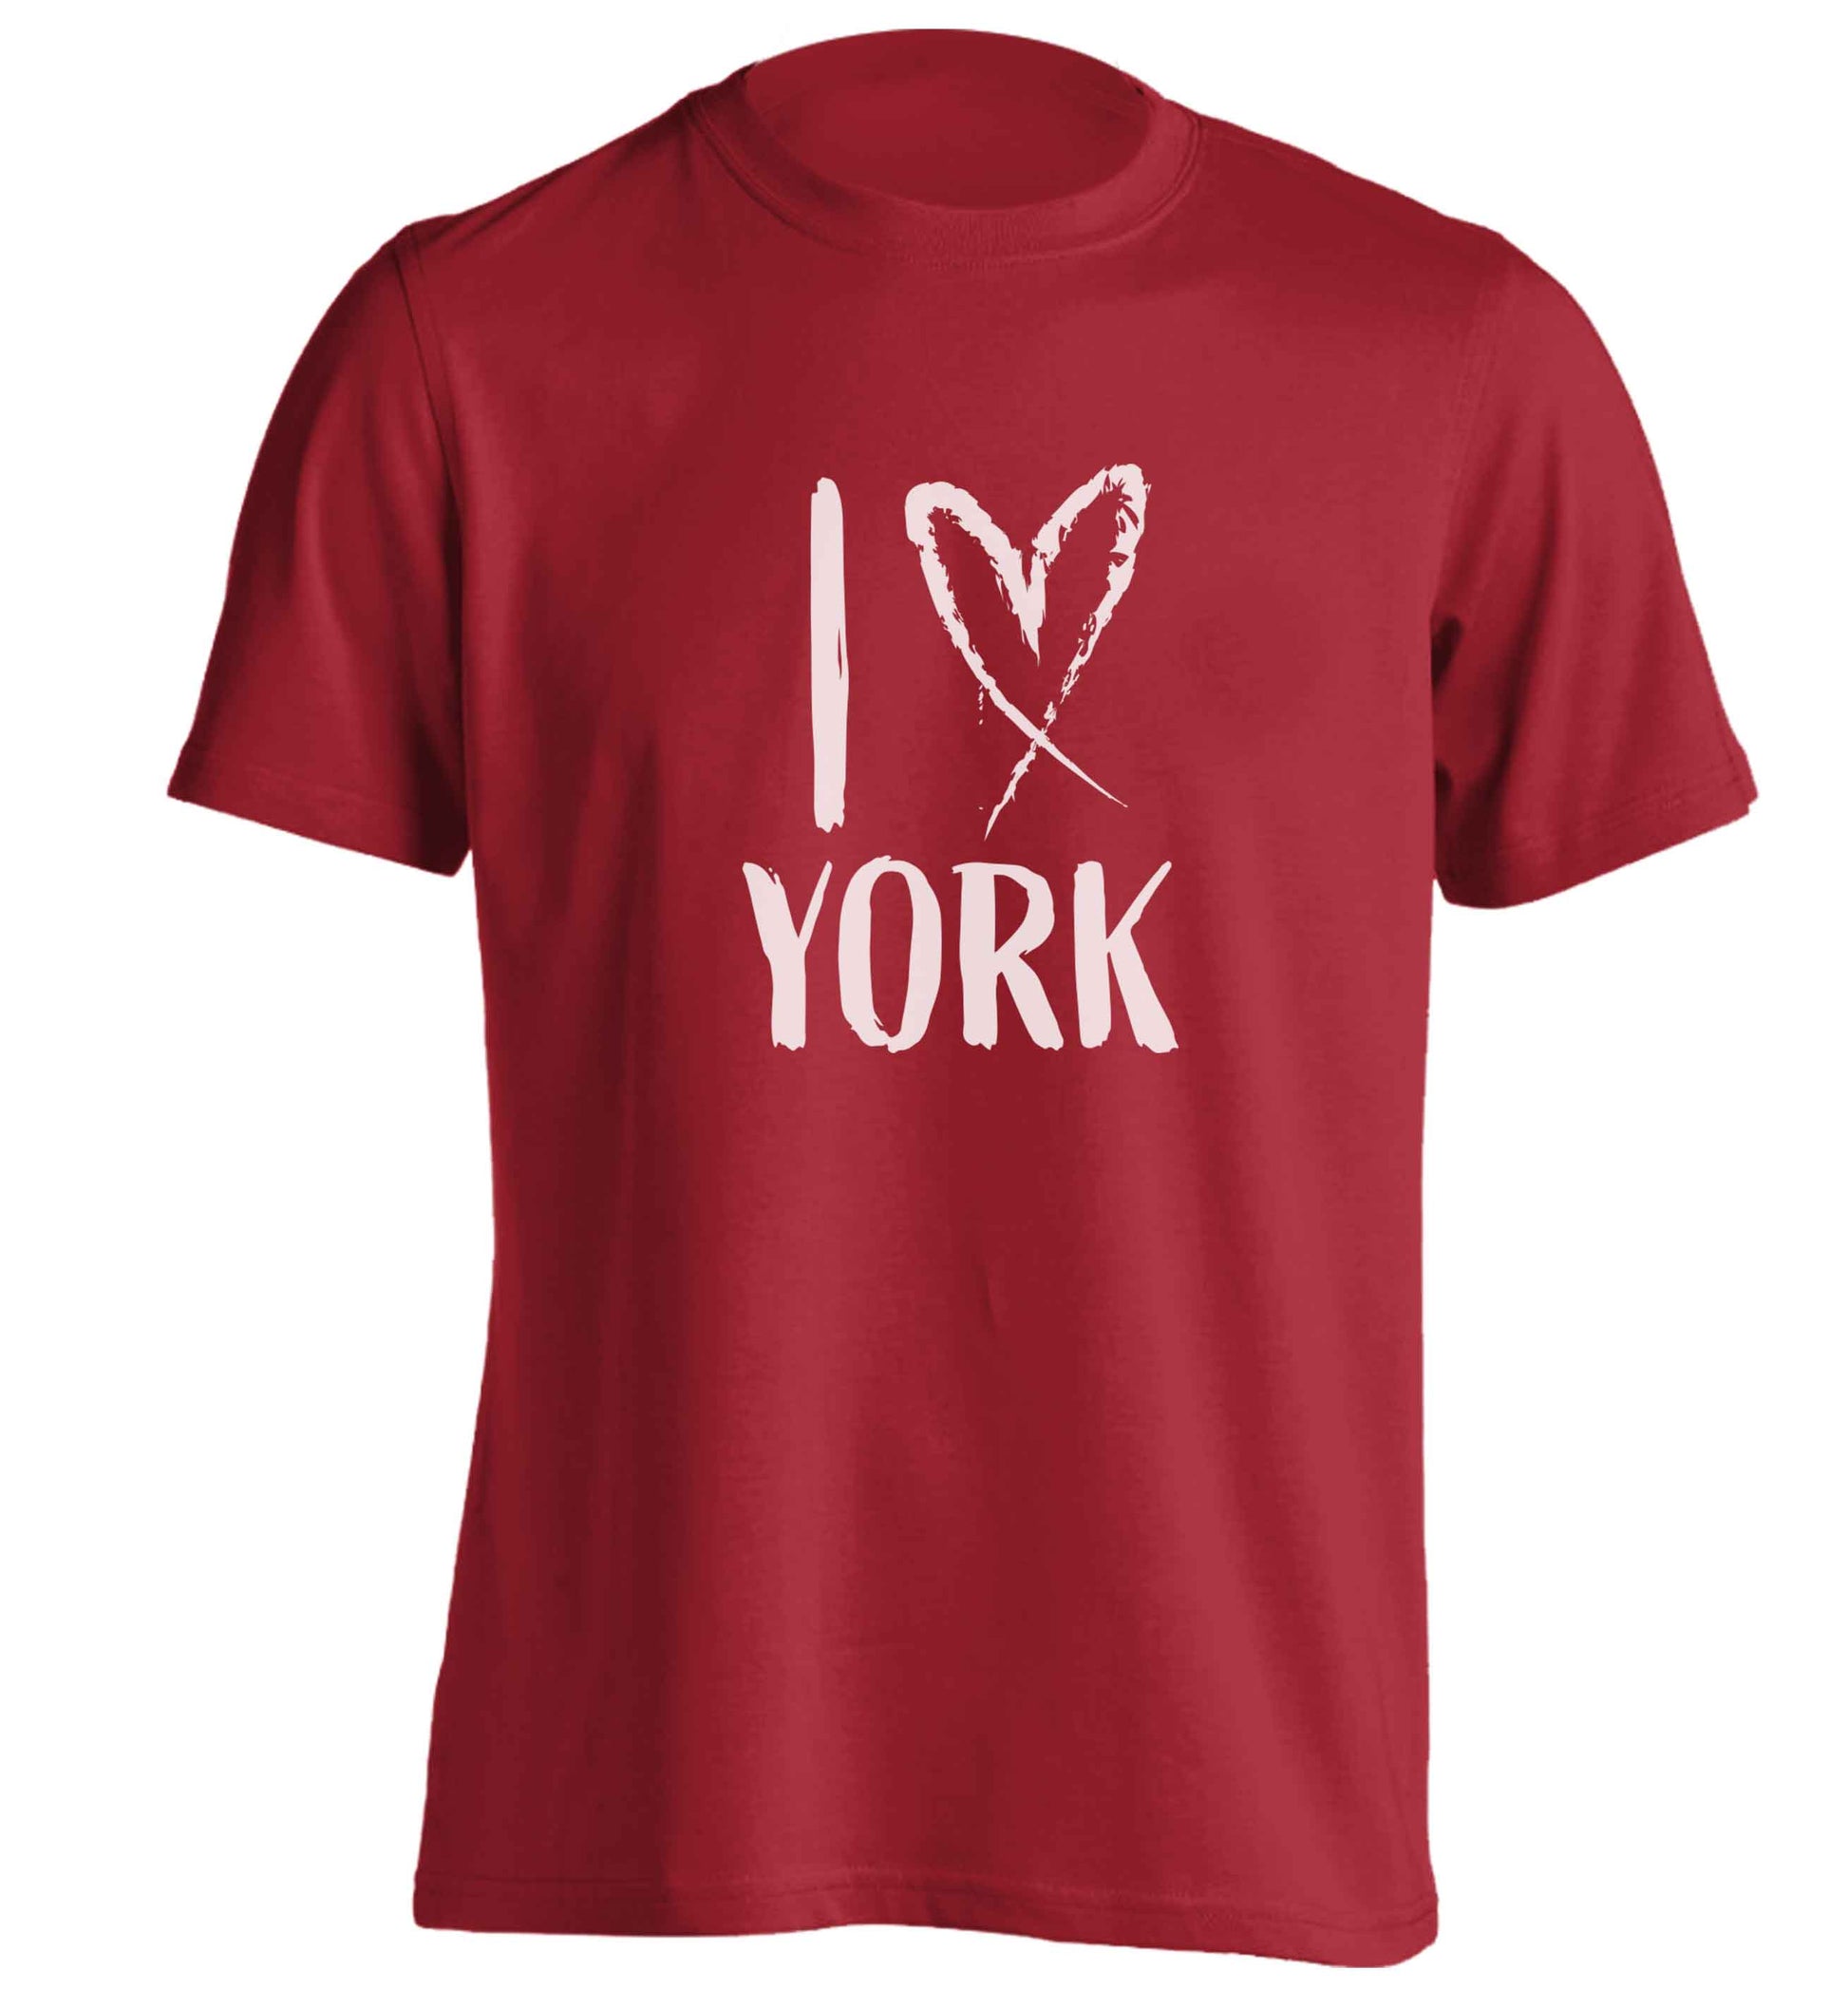 I love York adults unisex red Tshirt 2XL